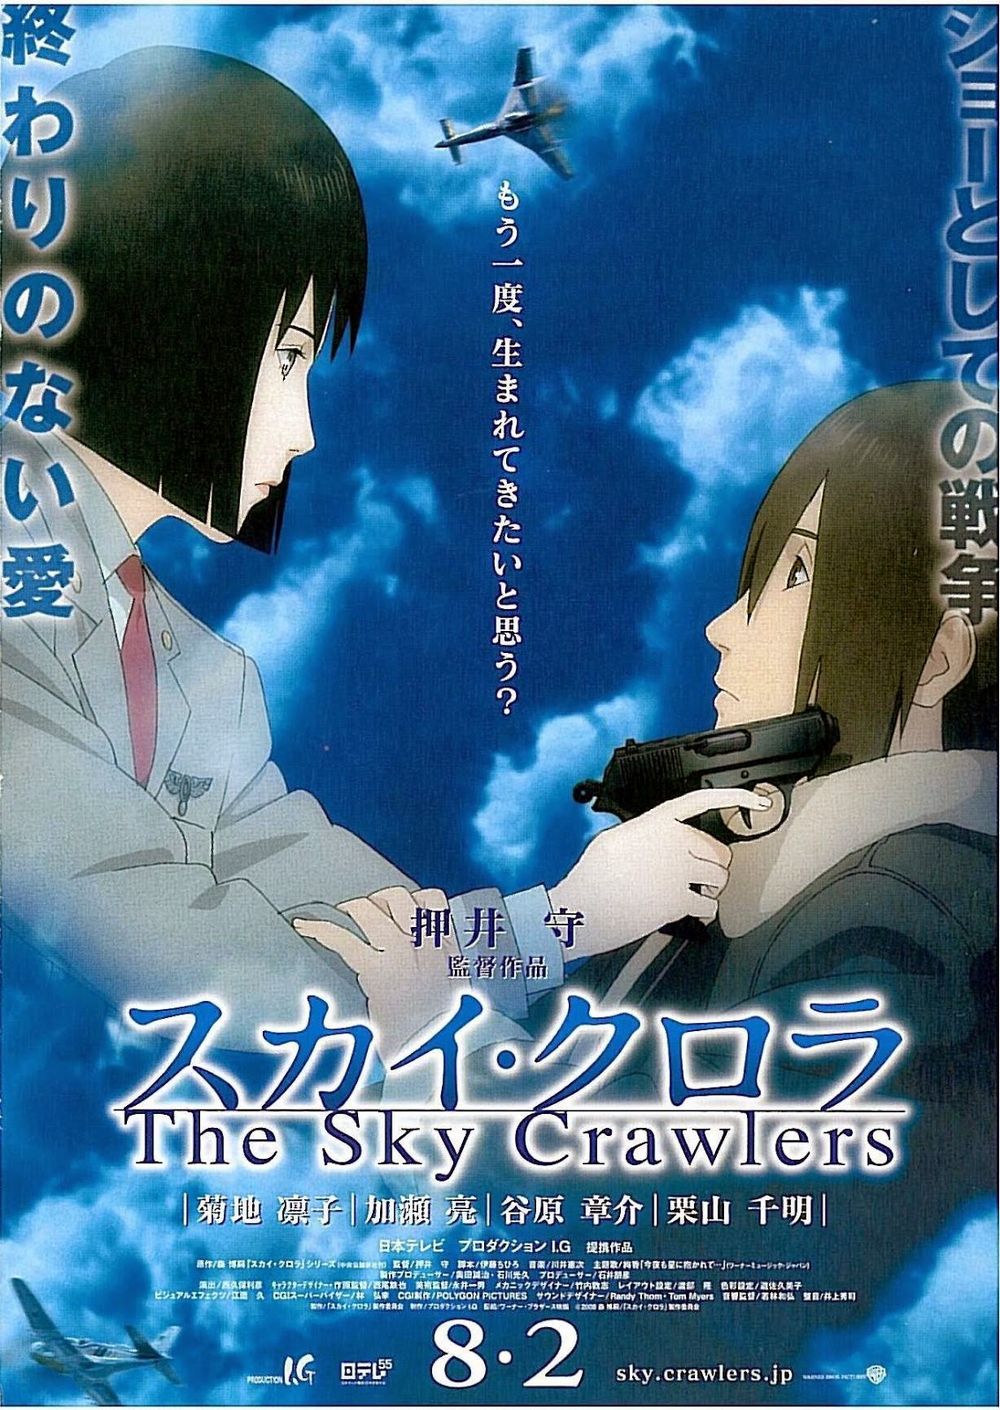 The sky crawlers news AnimeClick (3).jpg